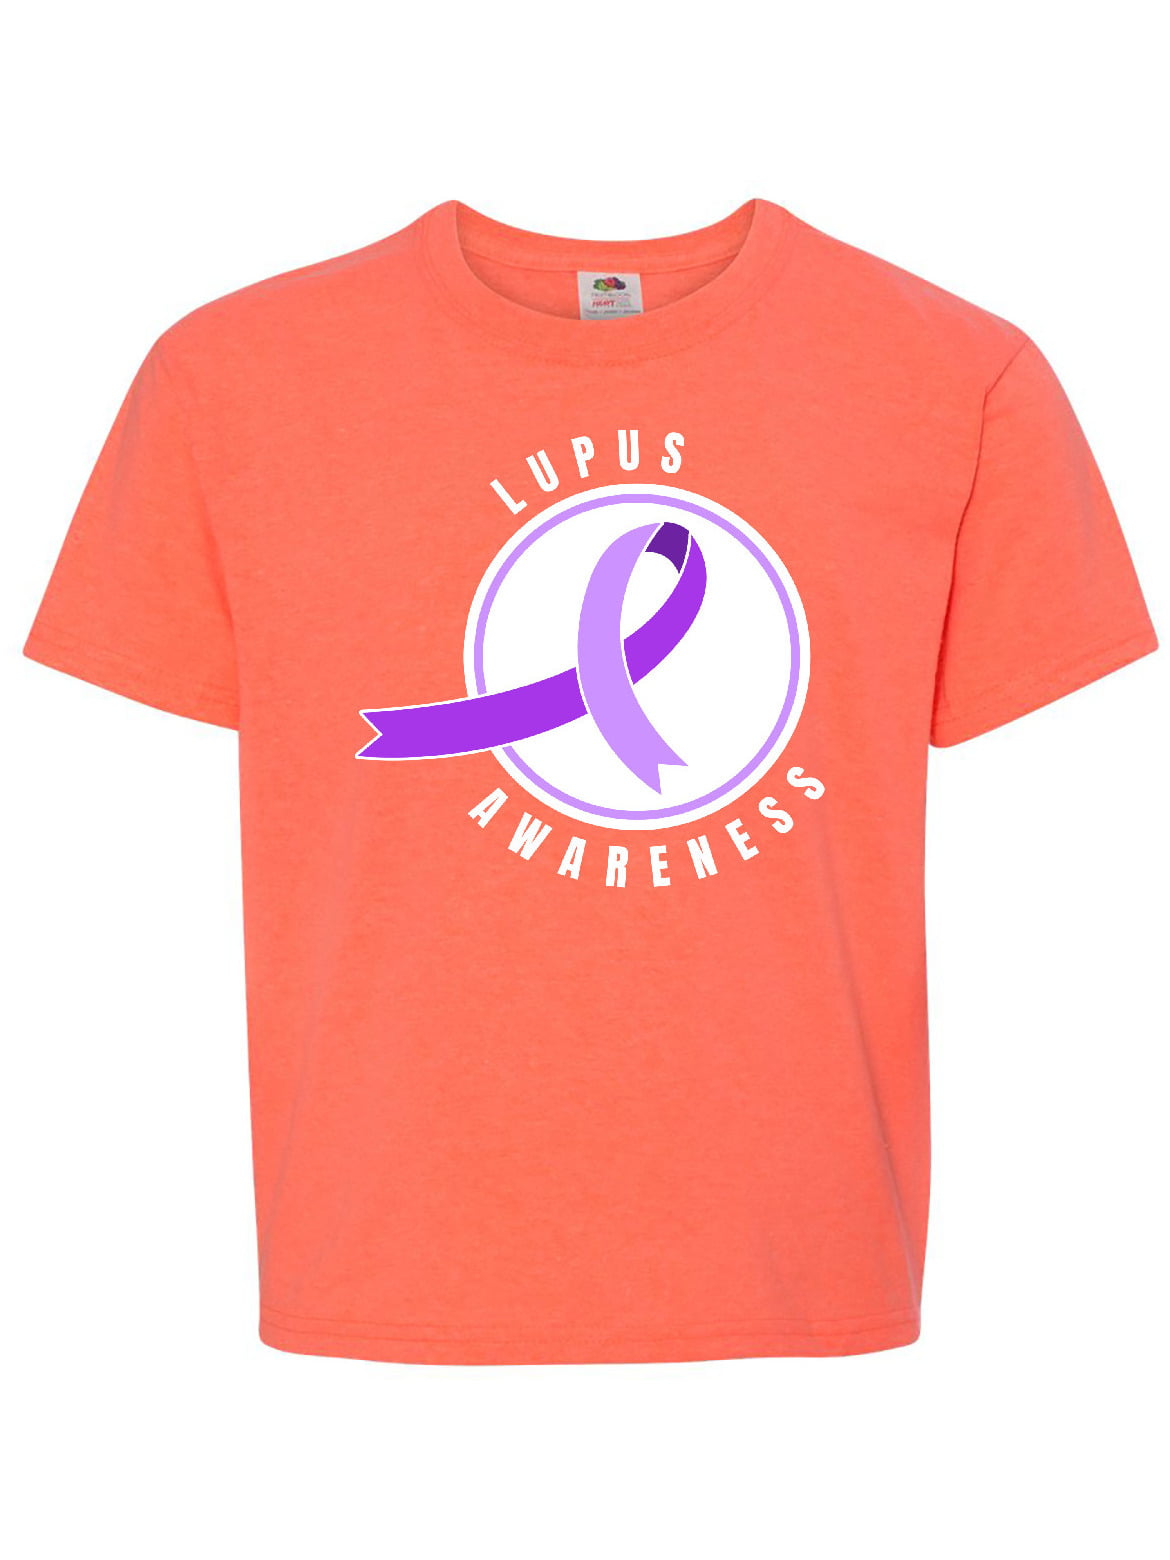 inktastic Lupus Awareness with Purple Ribbon Circle Baby T-Shirt